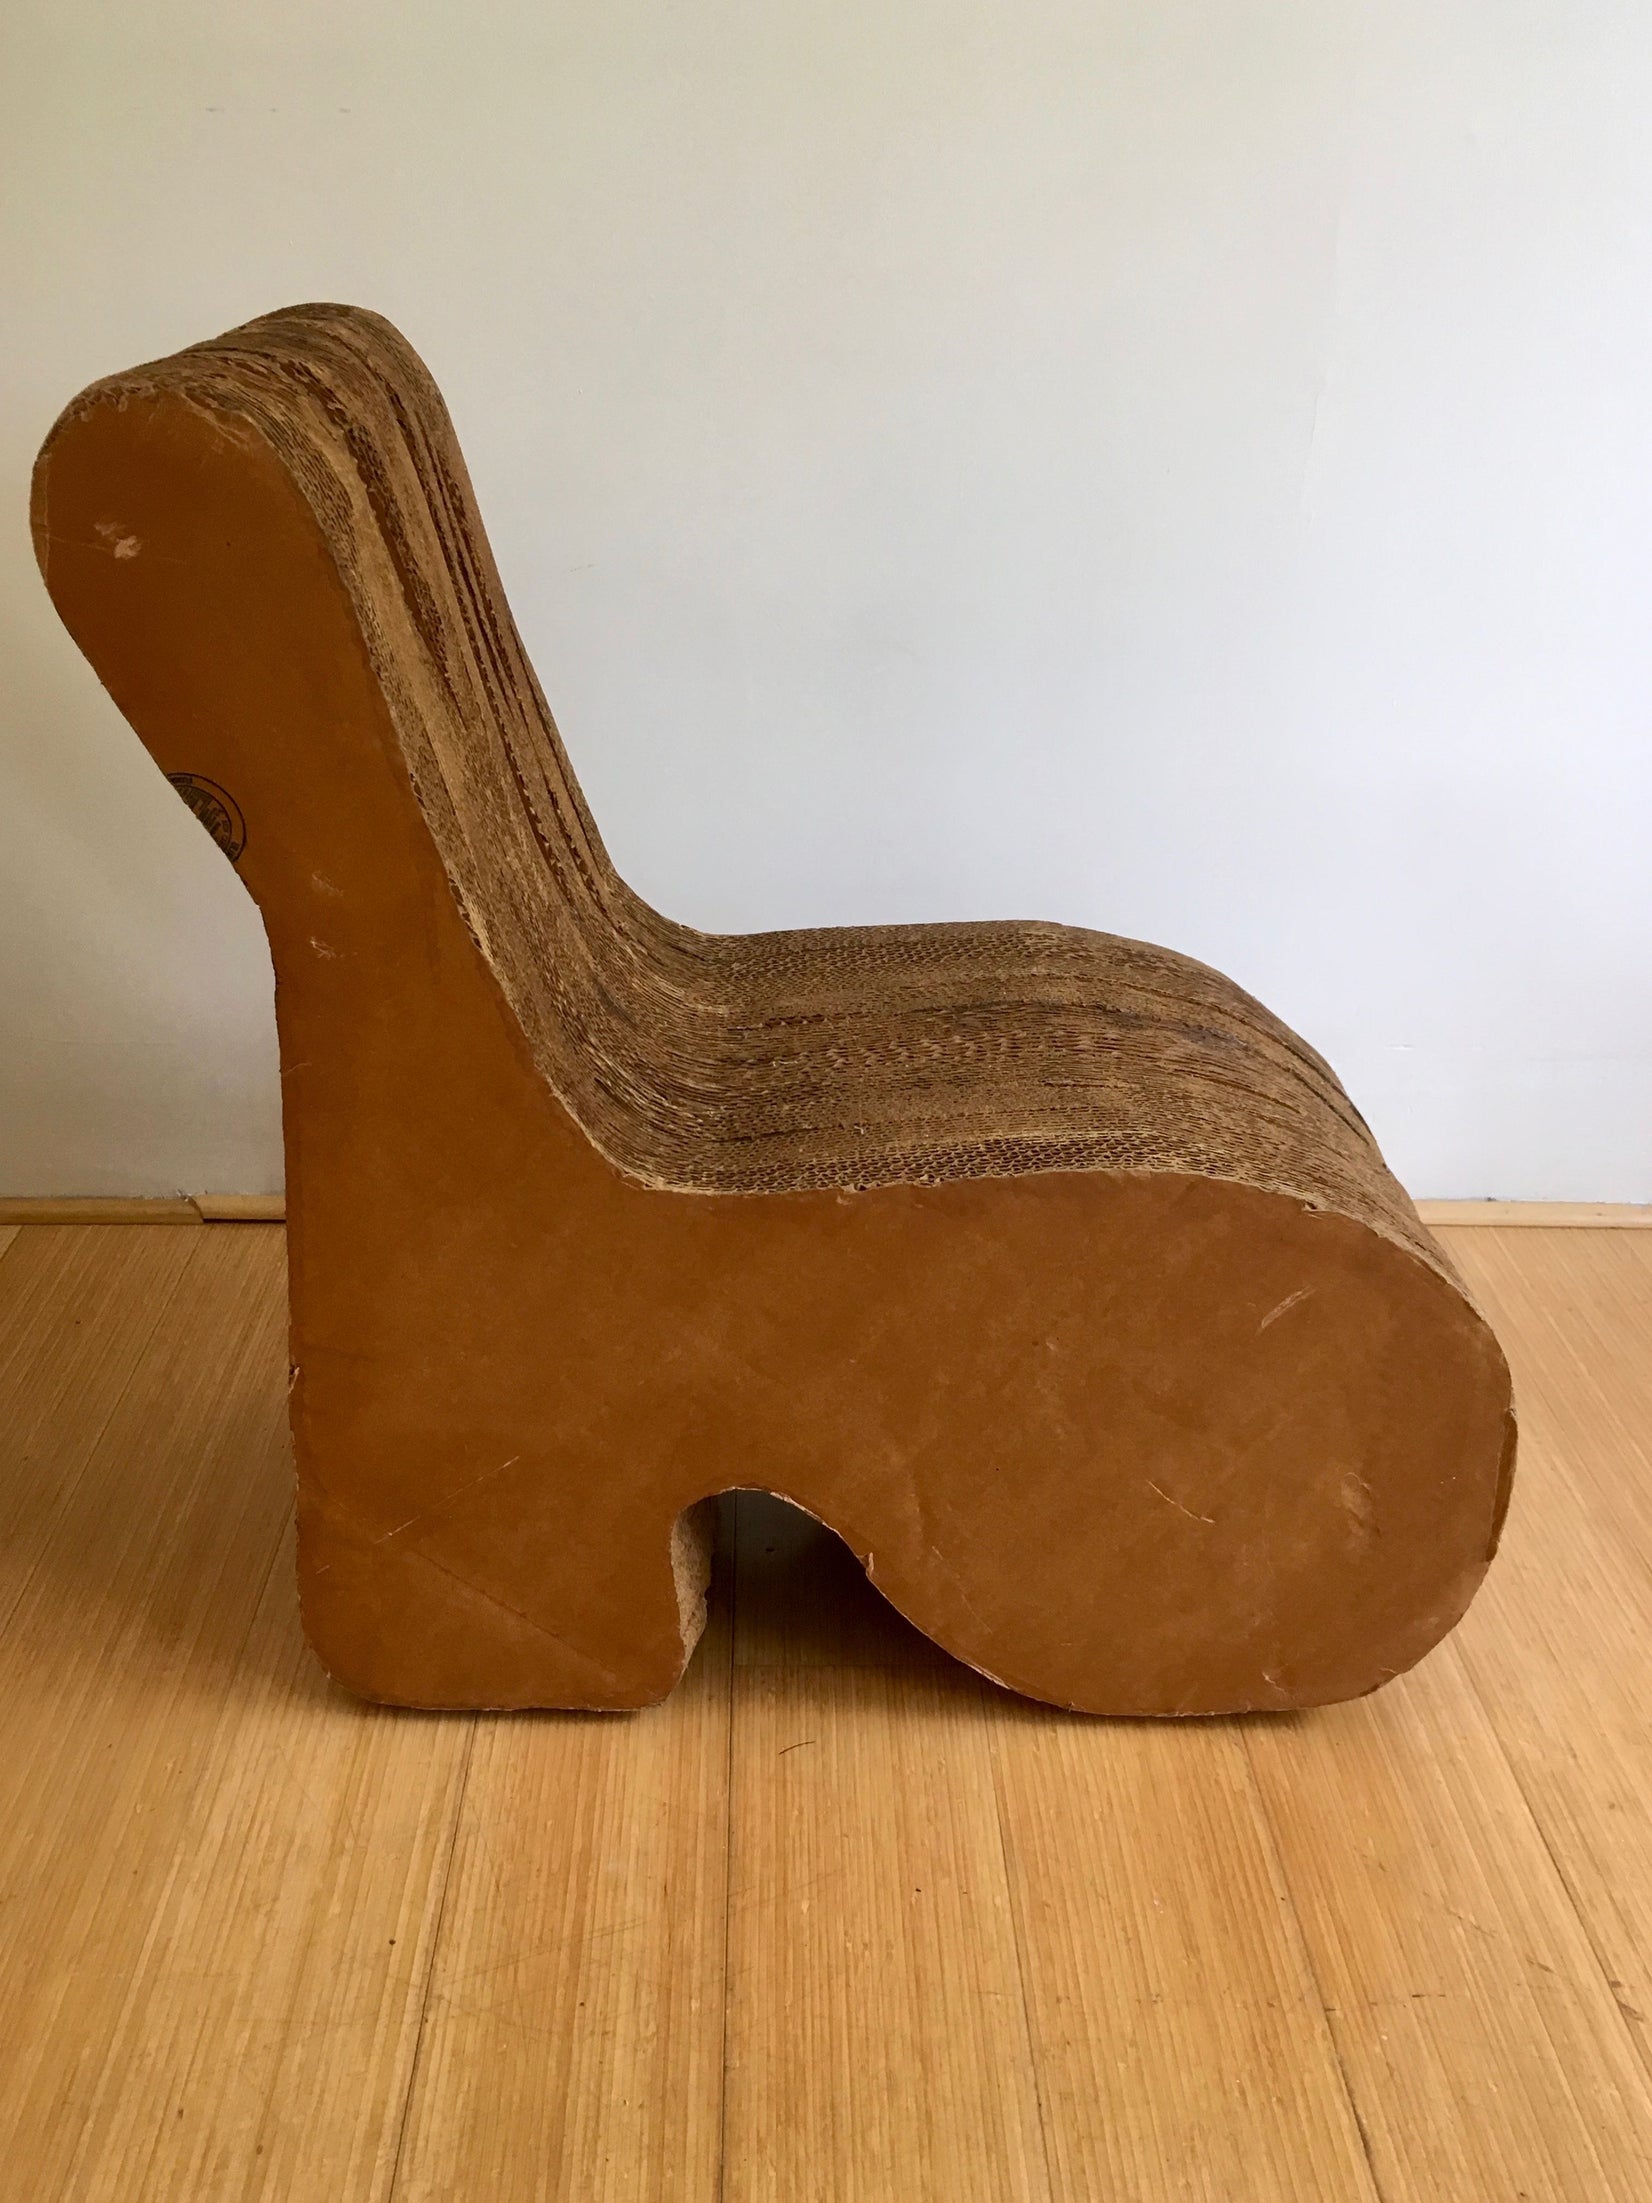 Sculptural Cardboard Chair, 1960s USA